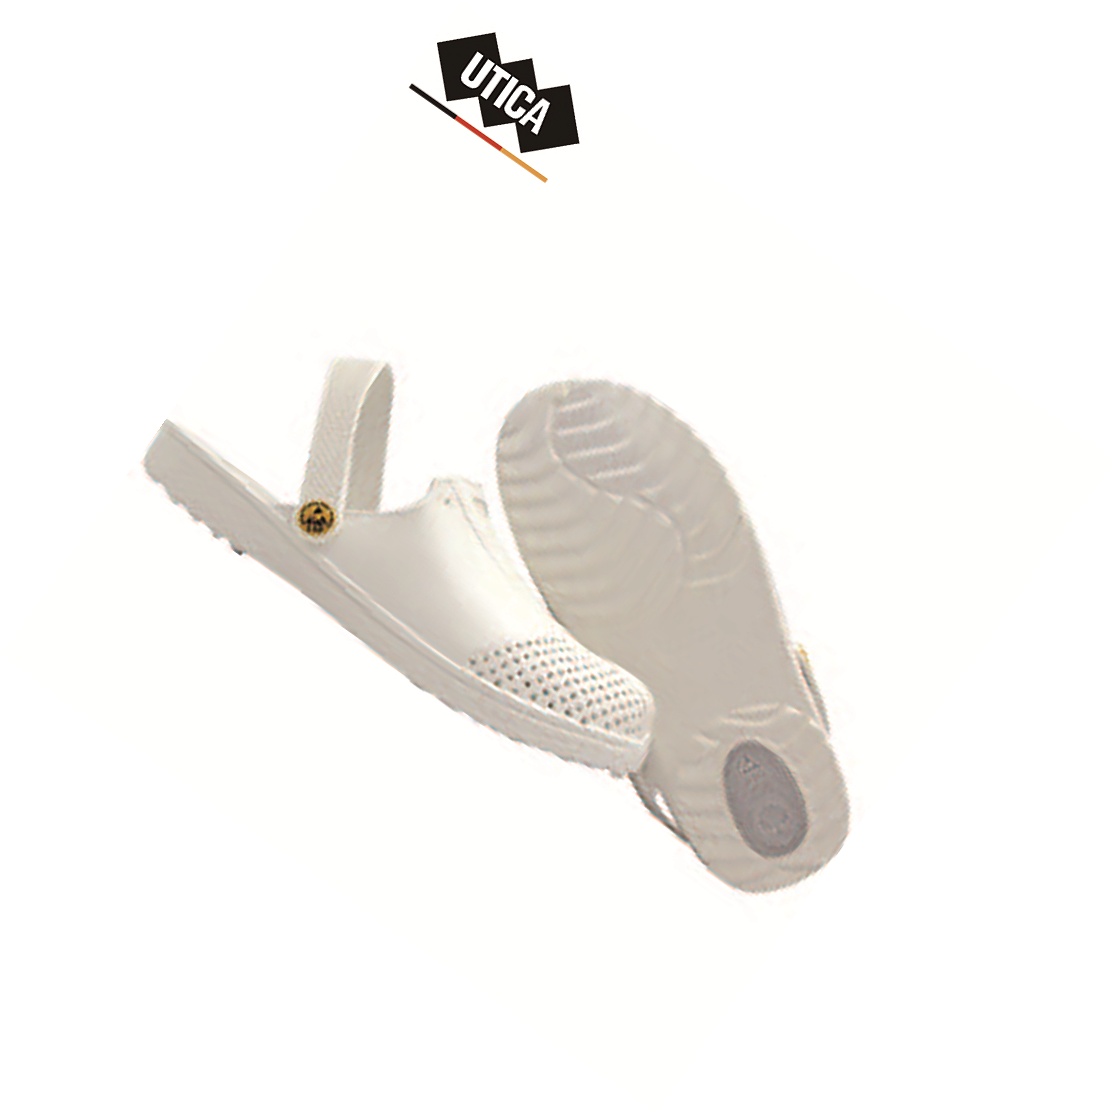 UTICA 防静电橡塑凉鞋 白色 GE80-504-285